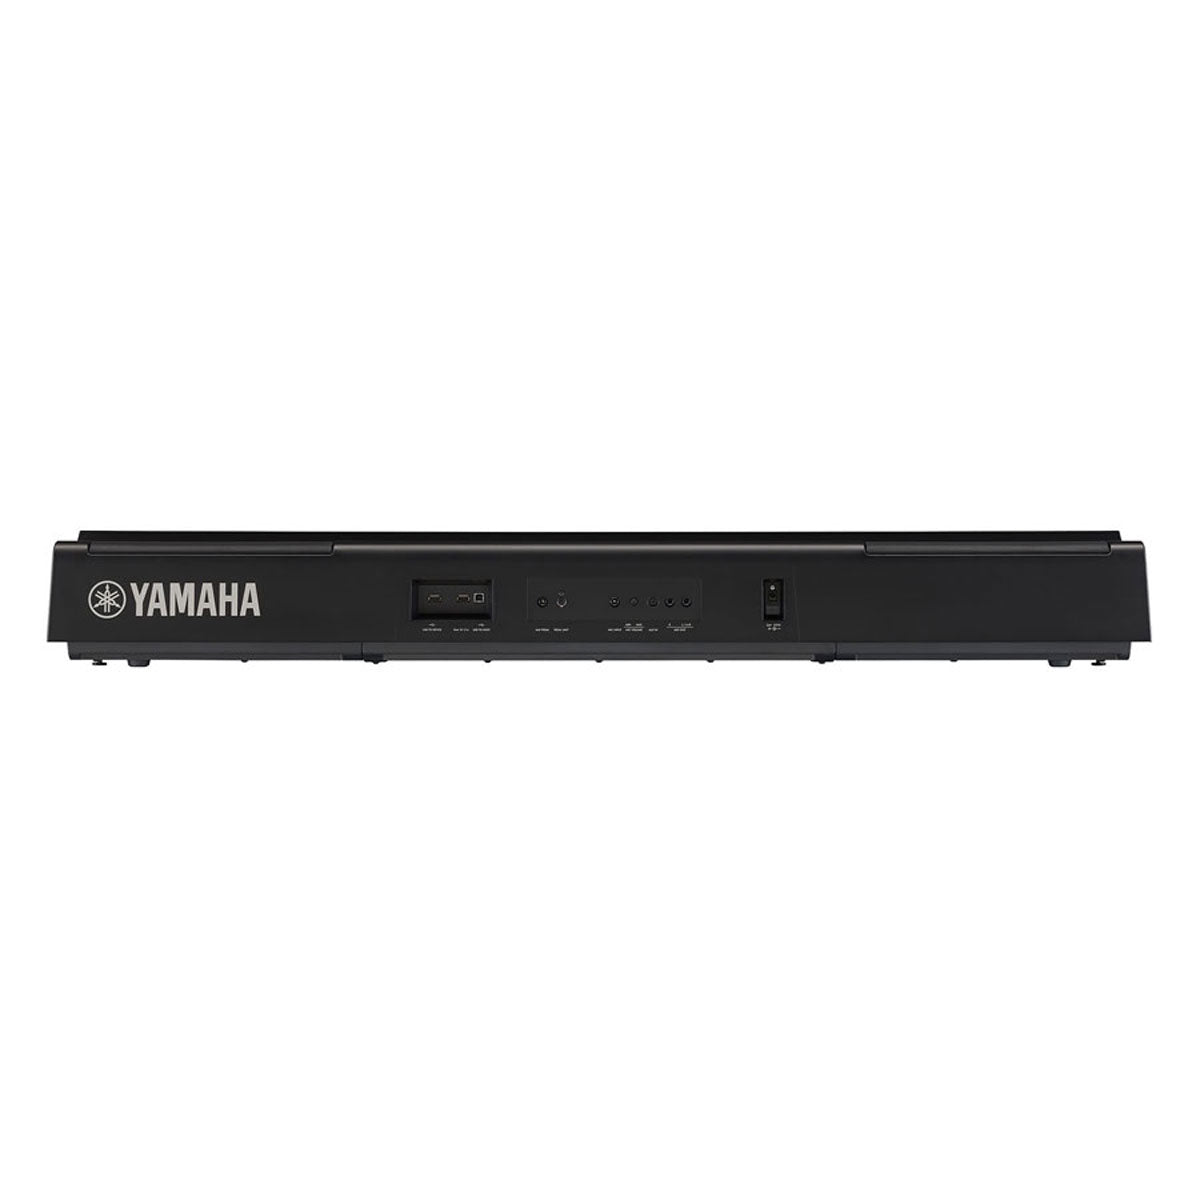 Yamaha P-S500 B 88-Key Portable Digital Smart Piano